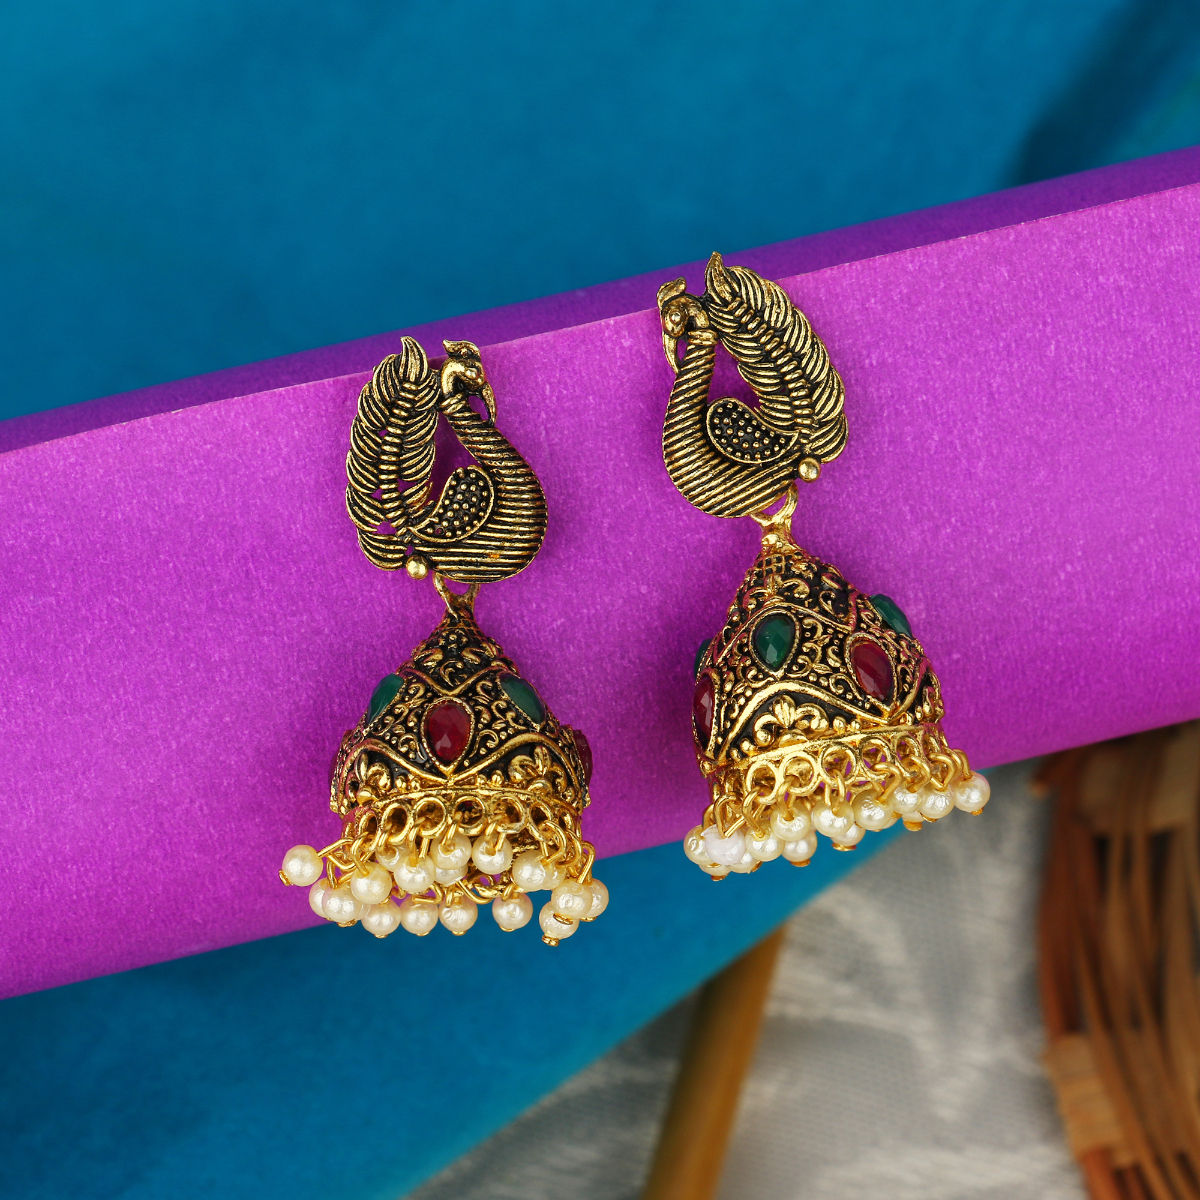 Big Jhumka earrings for women Black color Jhumka Latest design